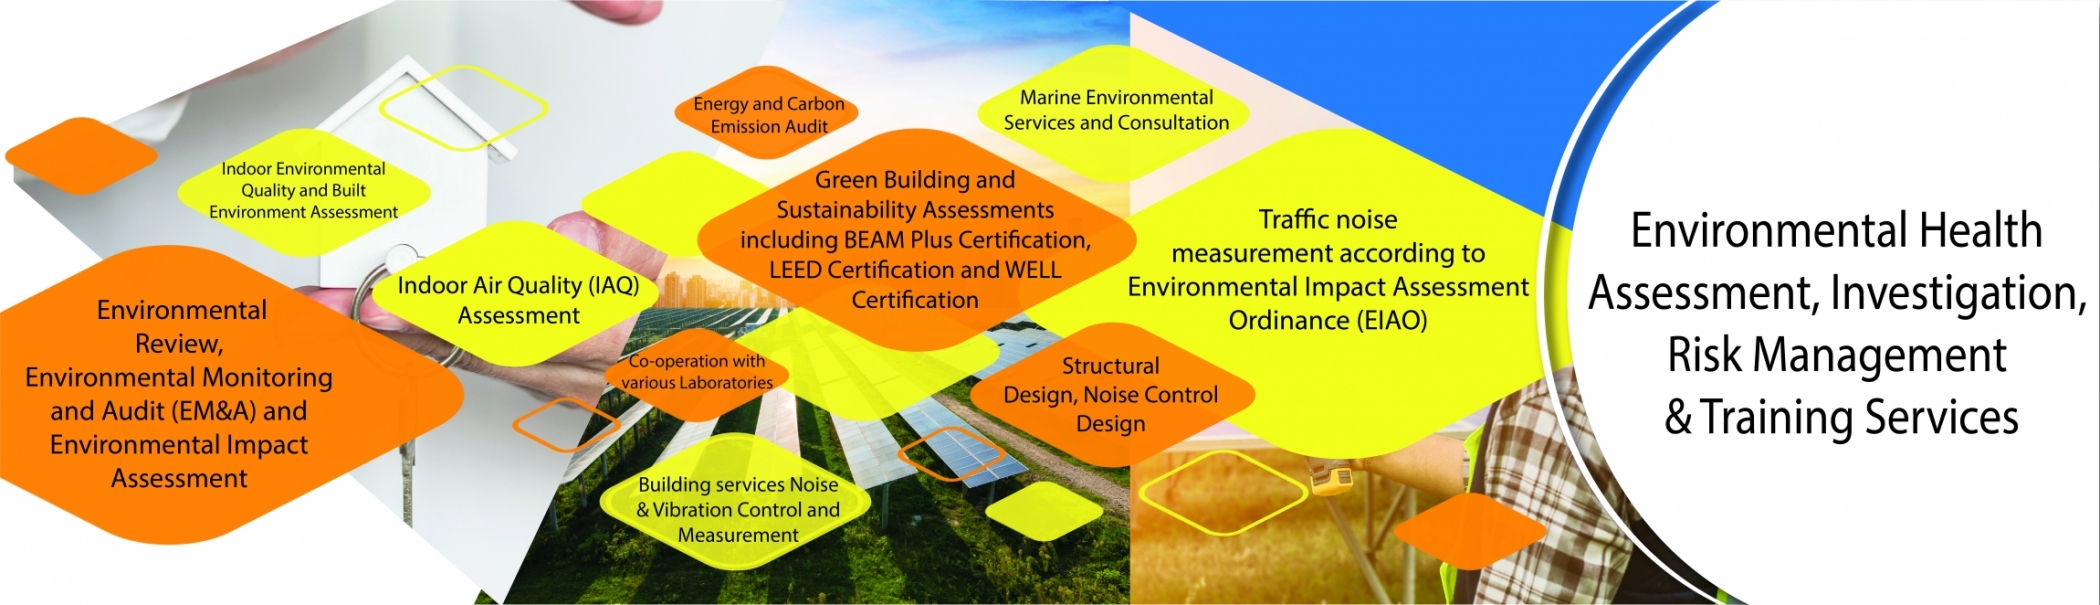 Environmental Health Assessment, Investigation, Risk Management & Training Services-01